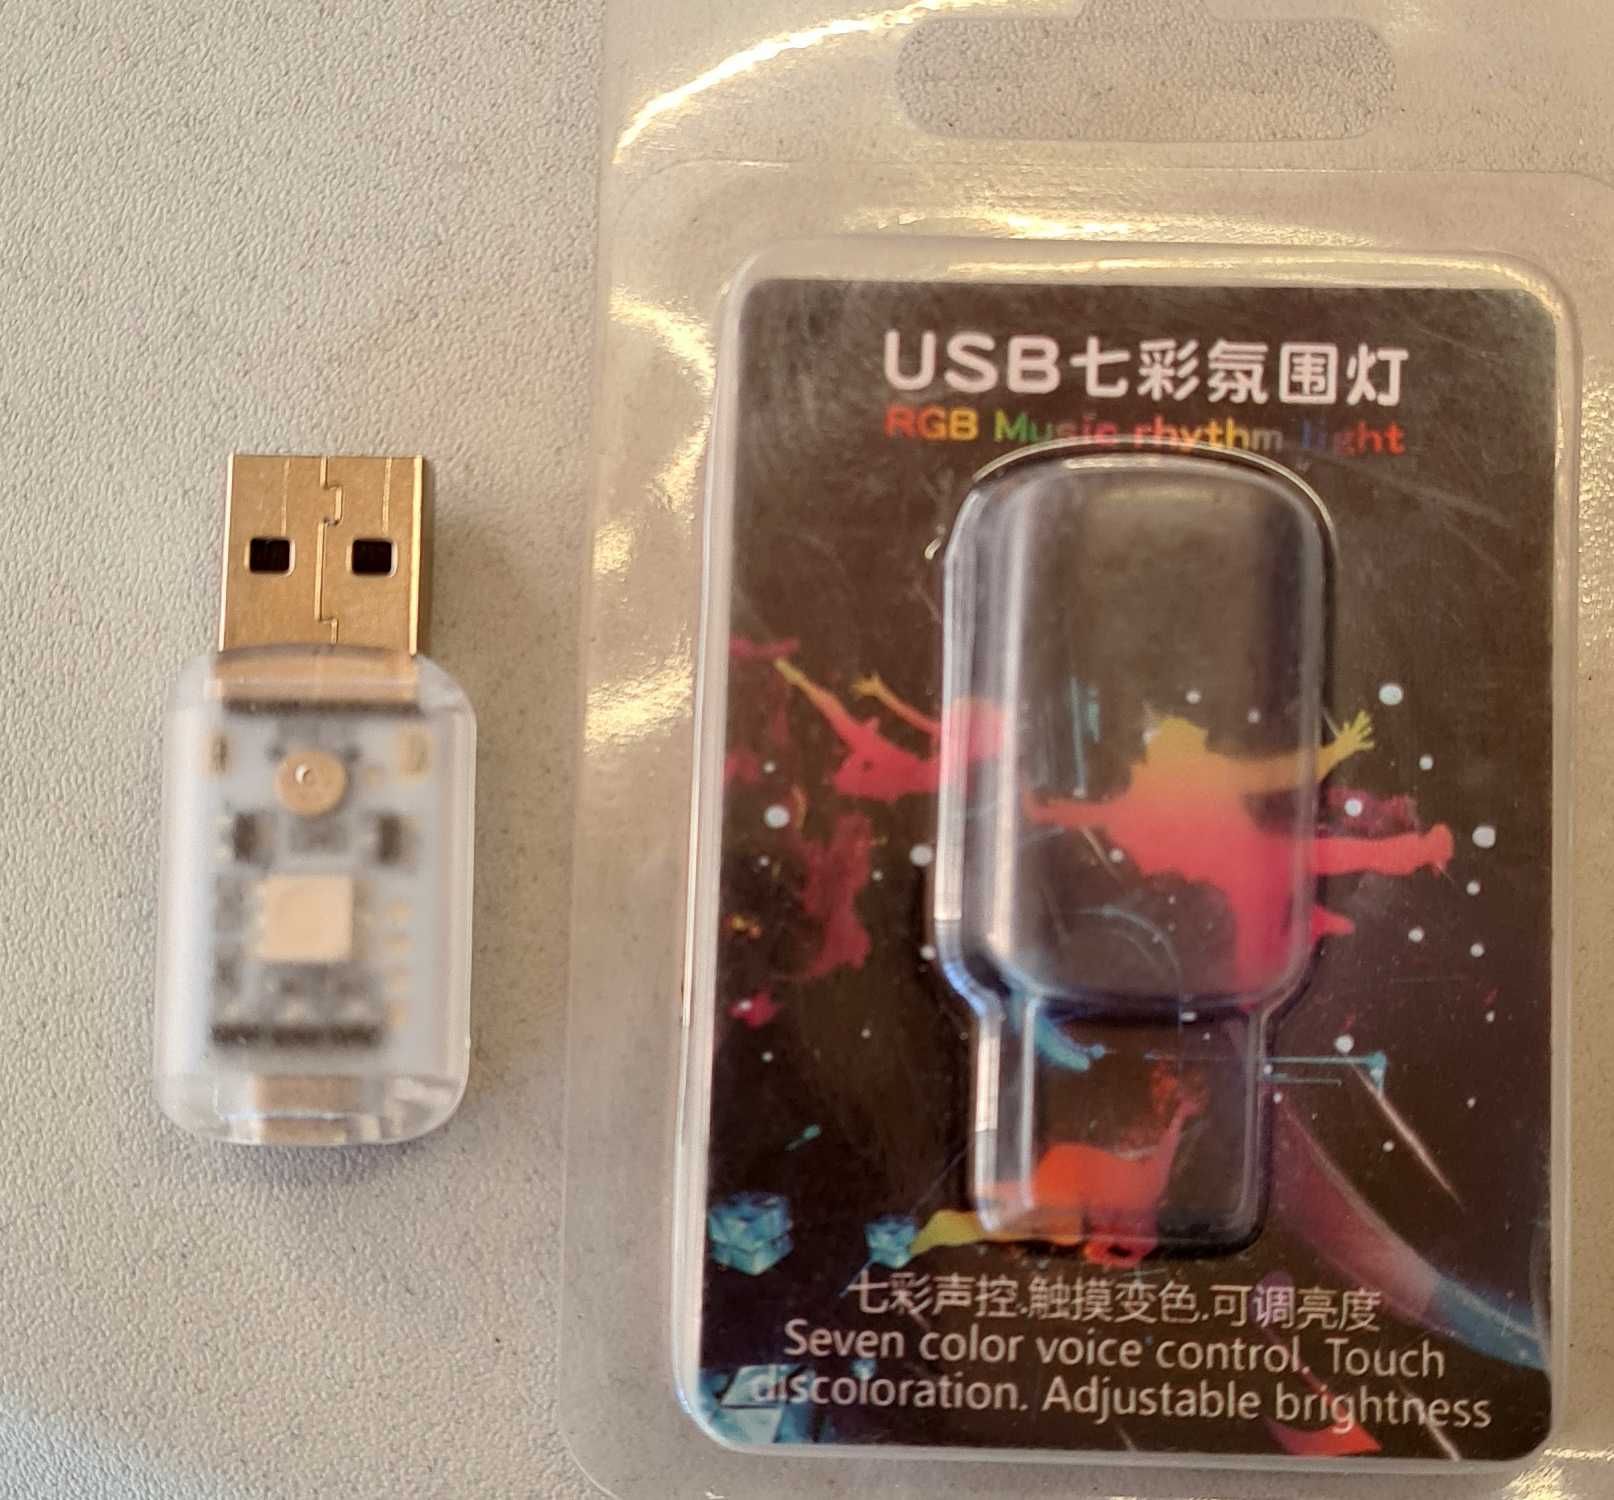 USB RGB Music rhythm light